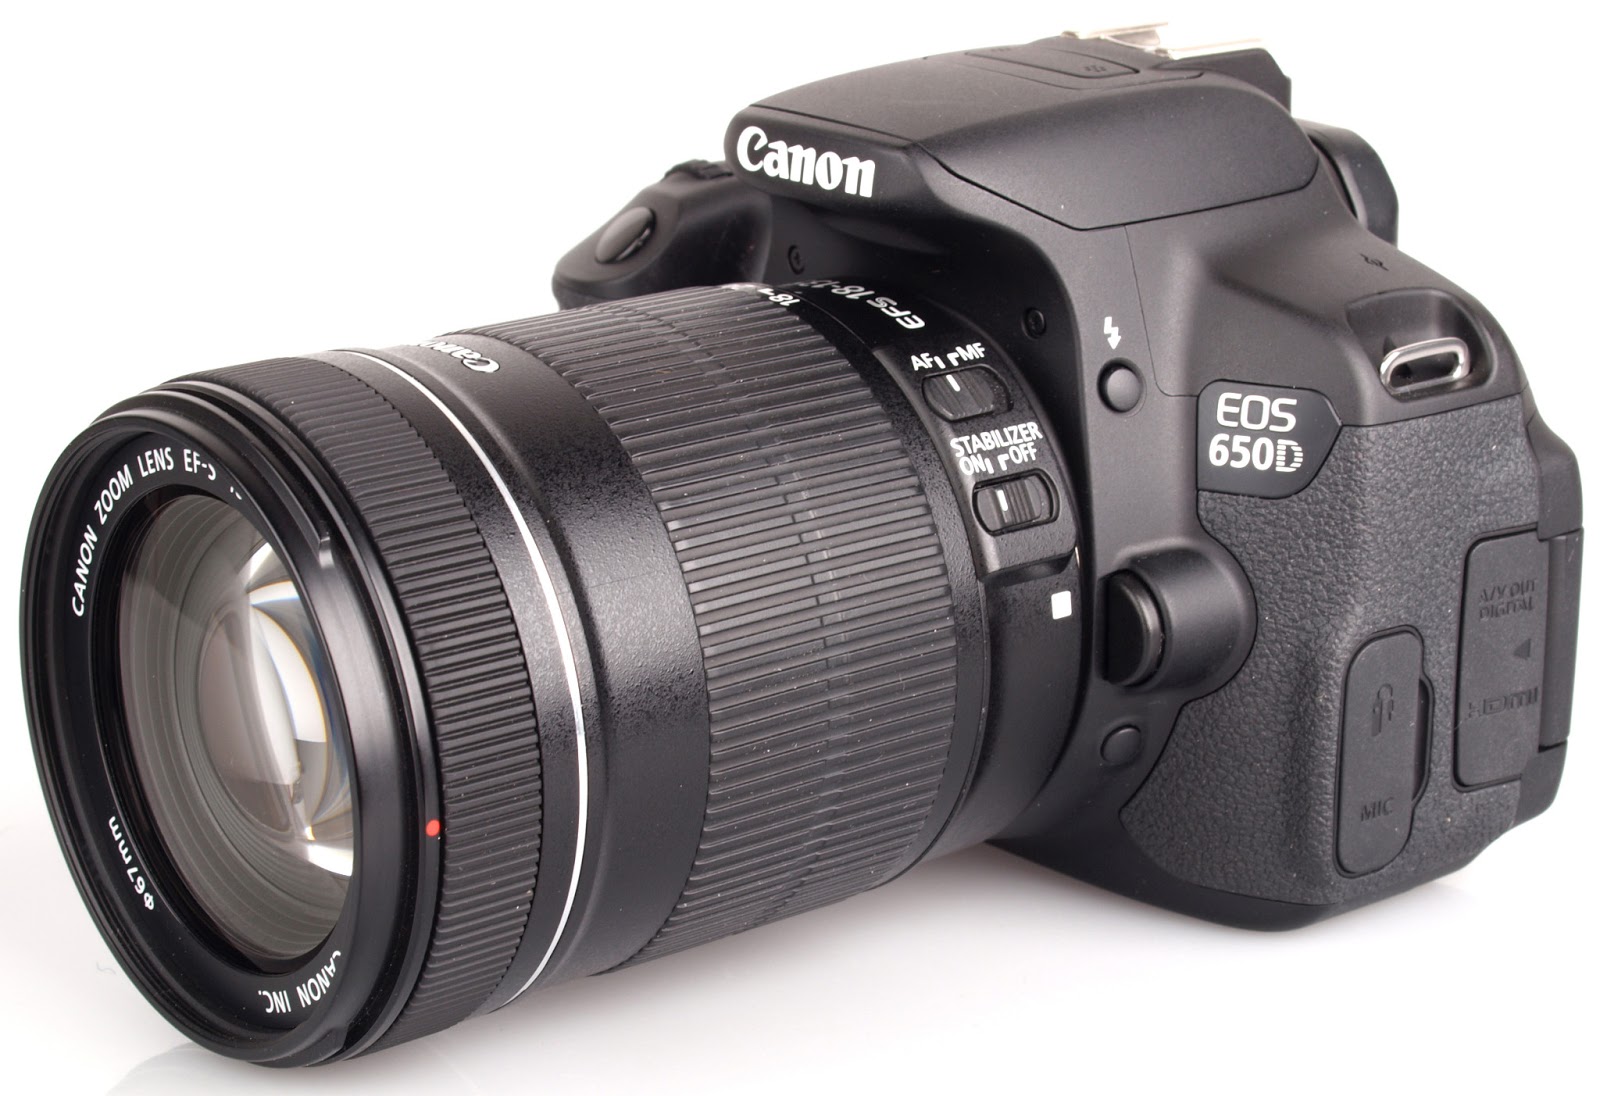 Harga kamera canon juli 2013 inilah daftar harga kamera dslr canon eos 